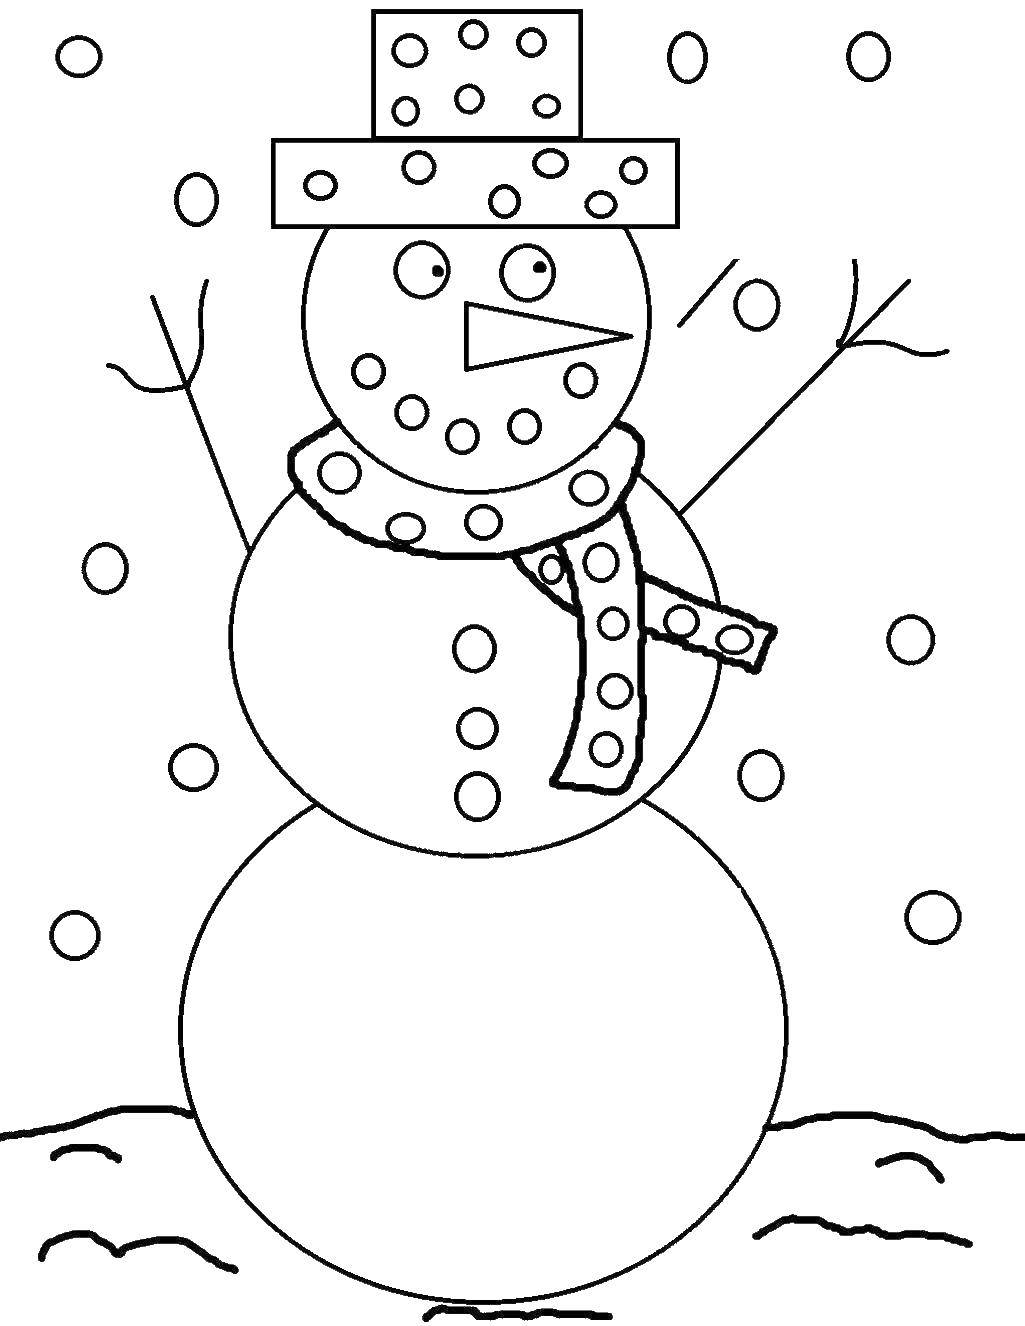 Coloring Snowman. Category snowman. Tags:  snowman.